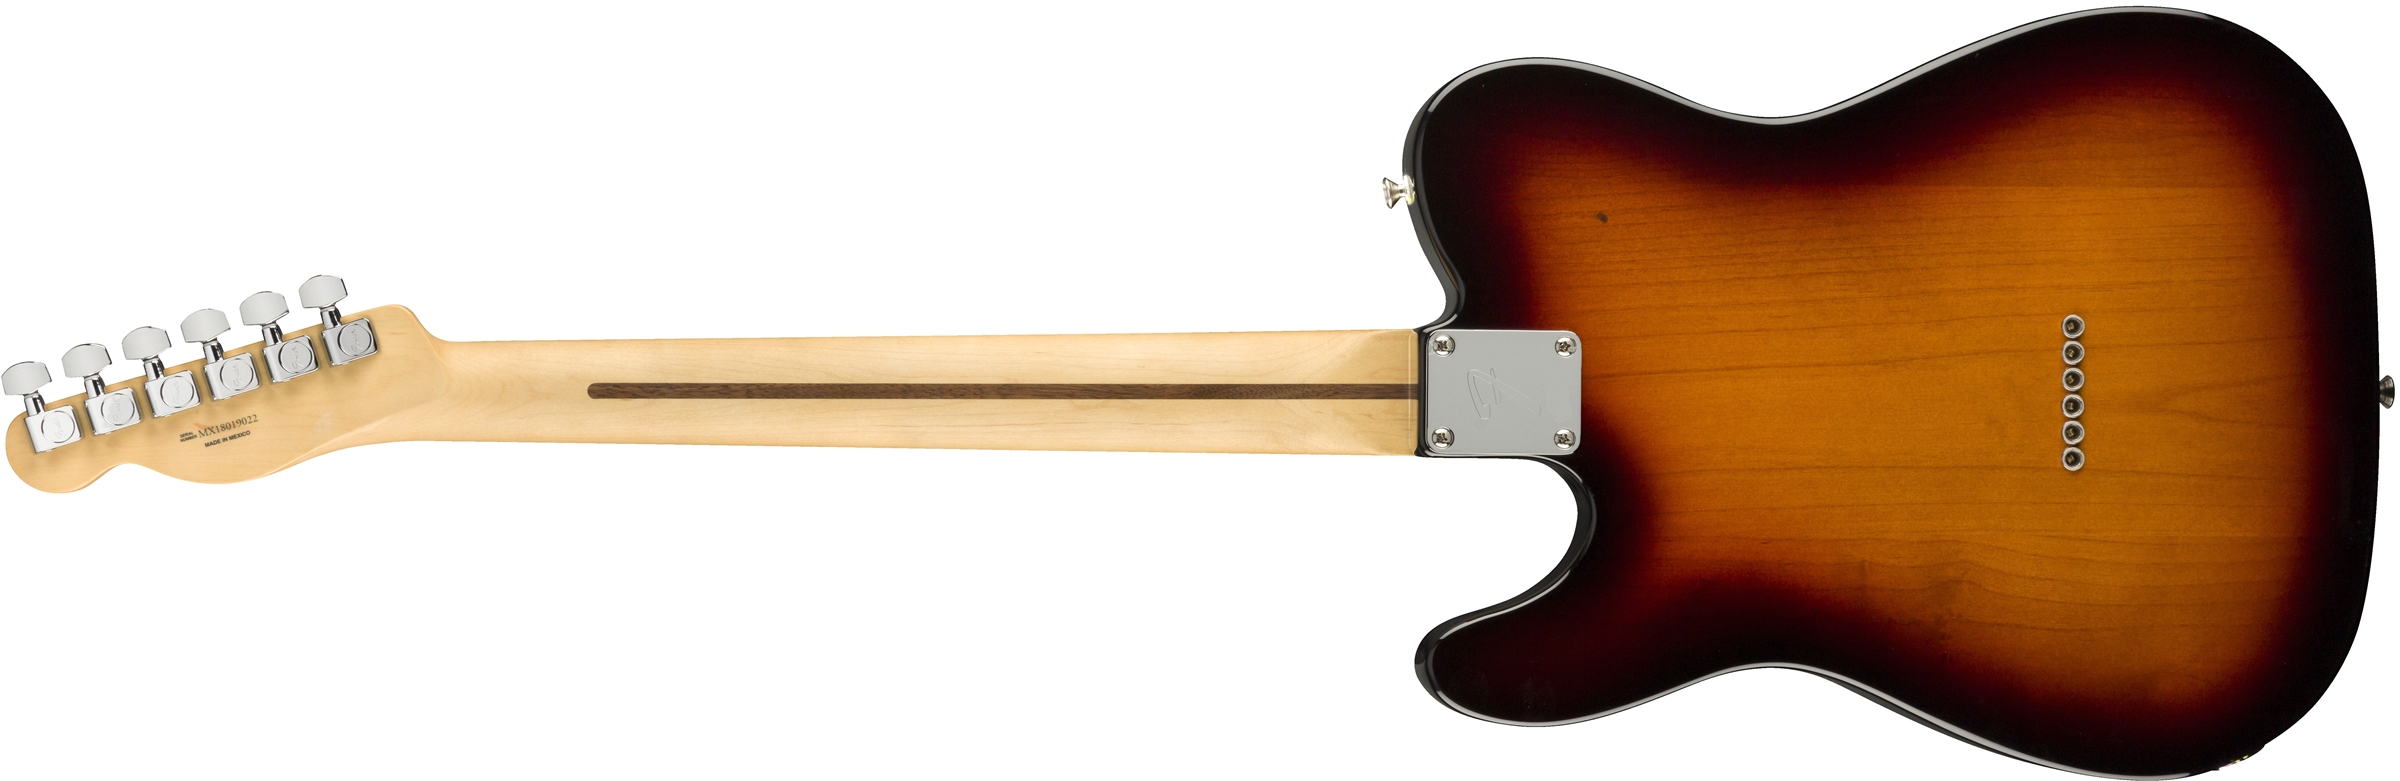 Fender Tele Player Mex Mn - 3-color Sunburst - Tel shape electric guitar - Variation 2